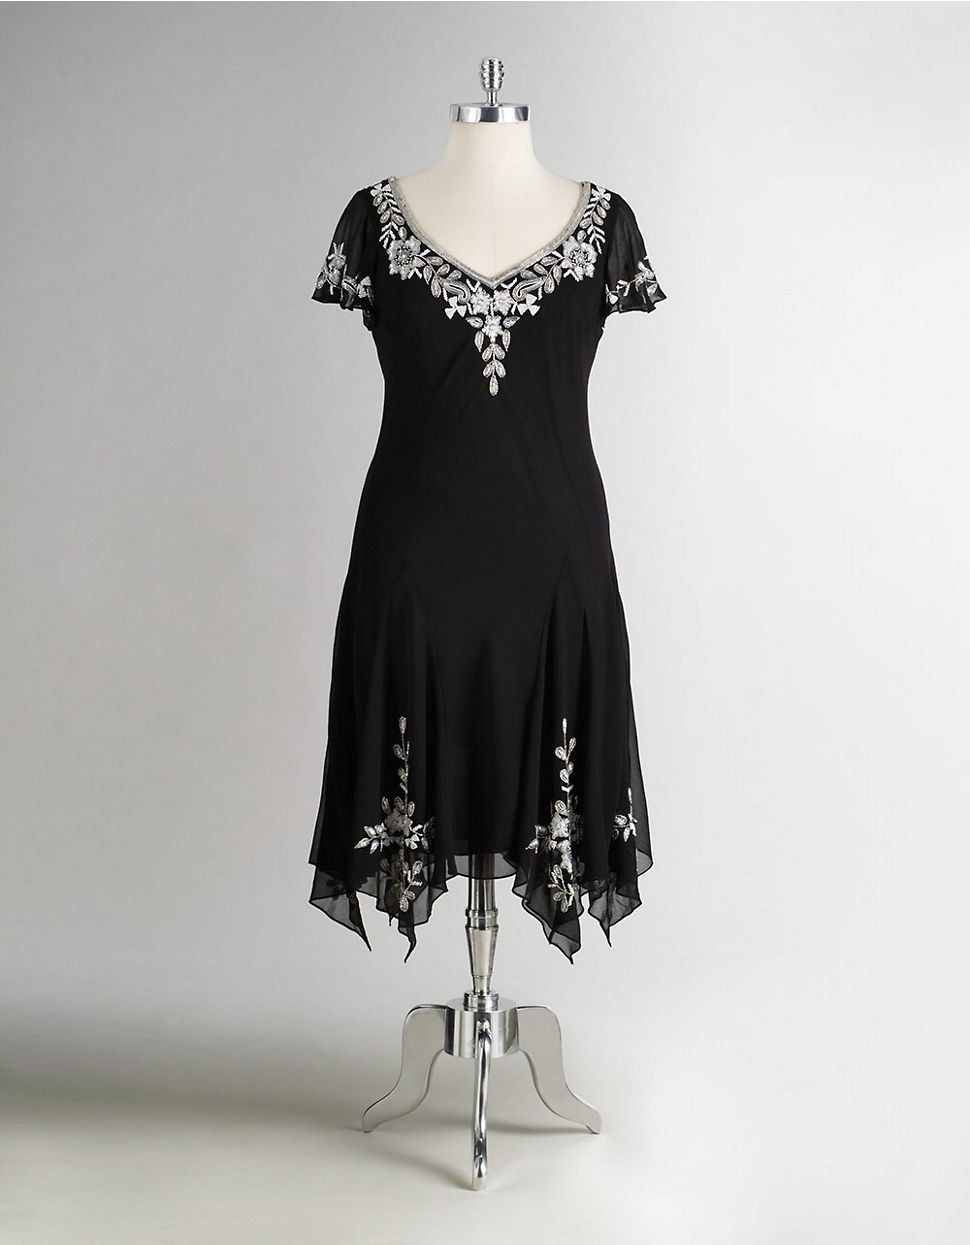 J Kara Plus Plus Size Short Cocktail Dress in Black - Lyst